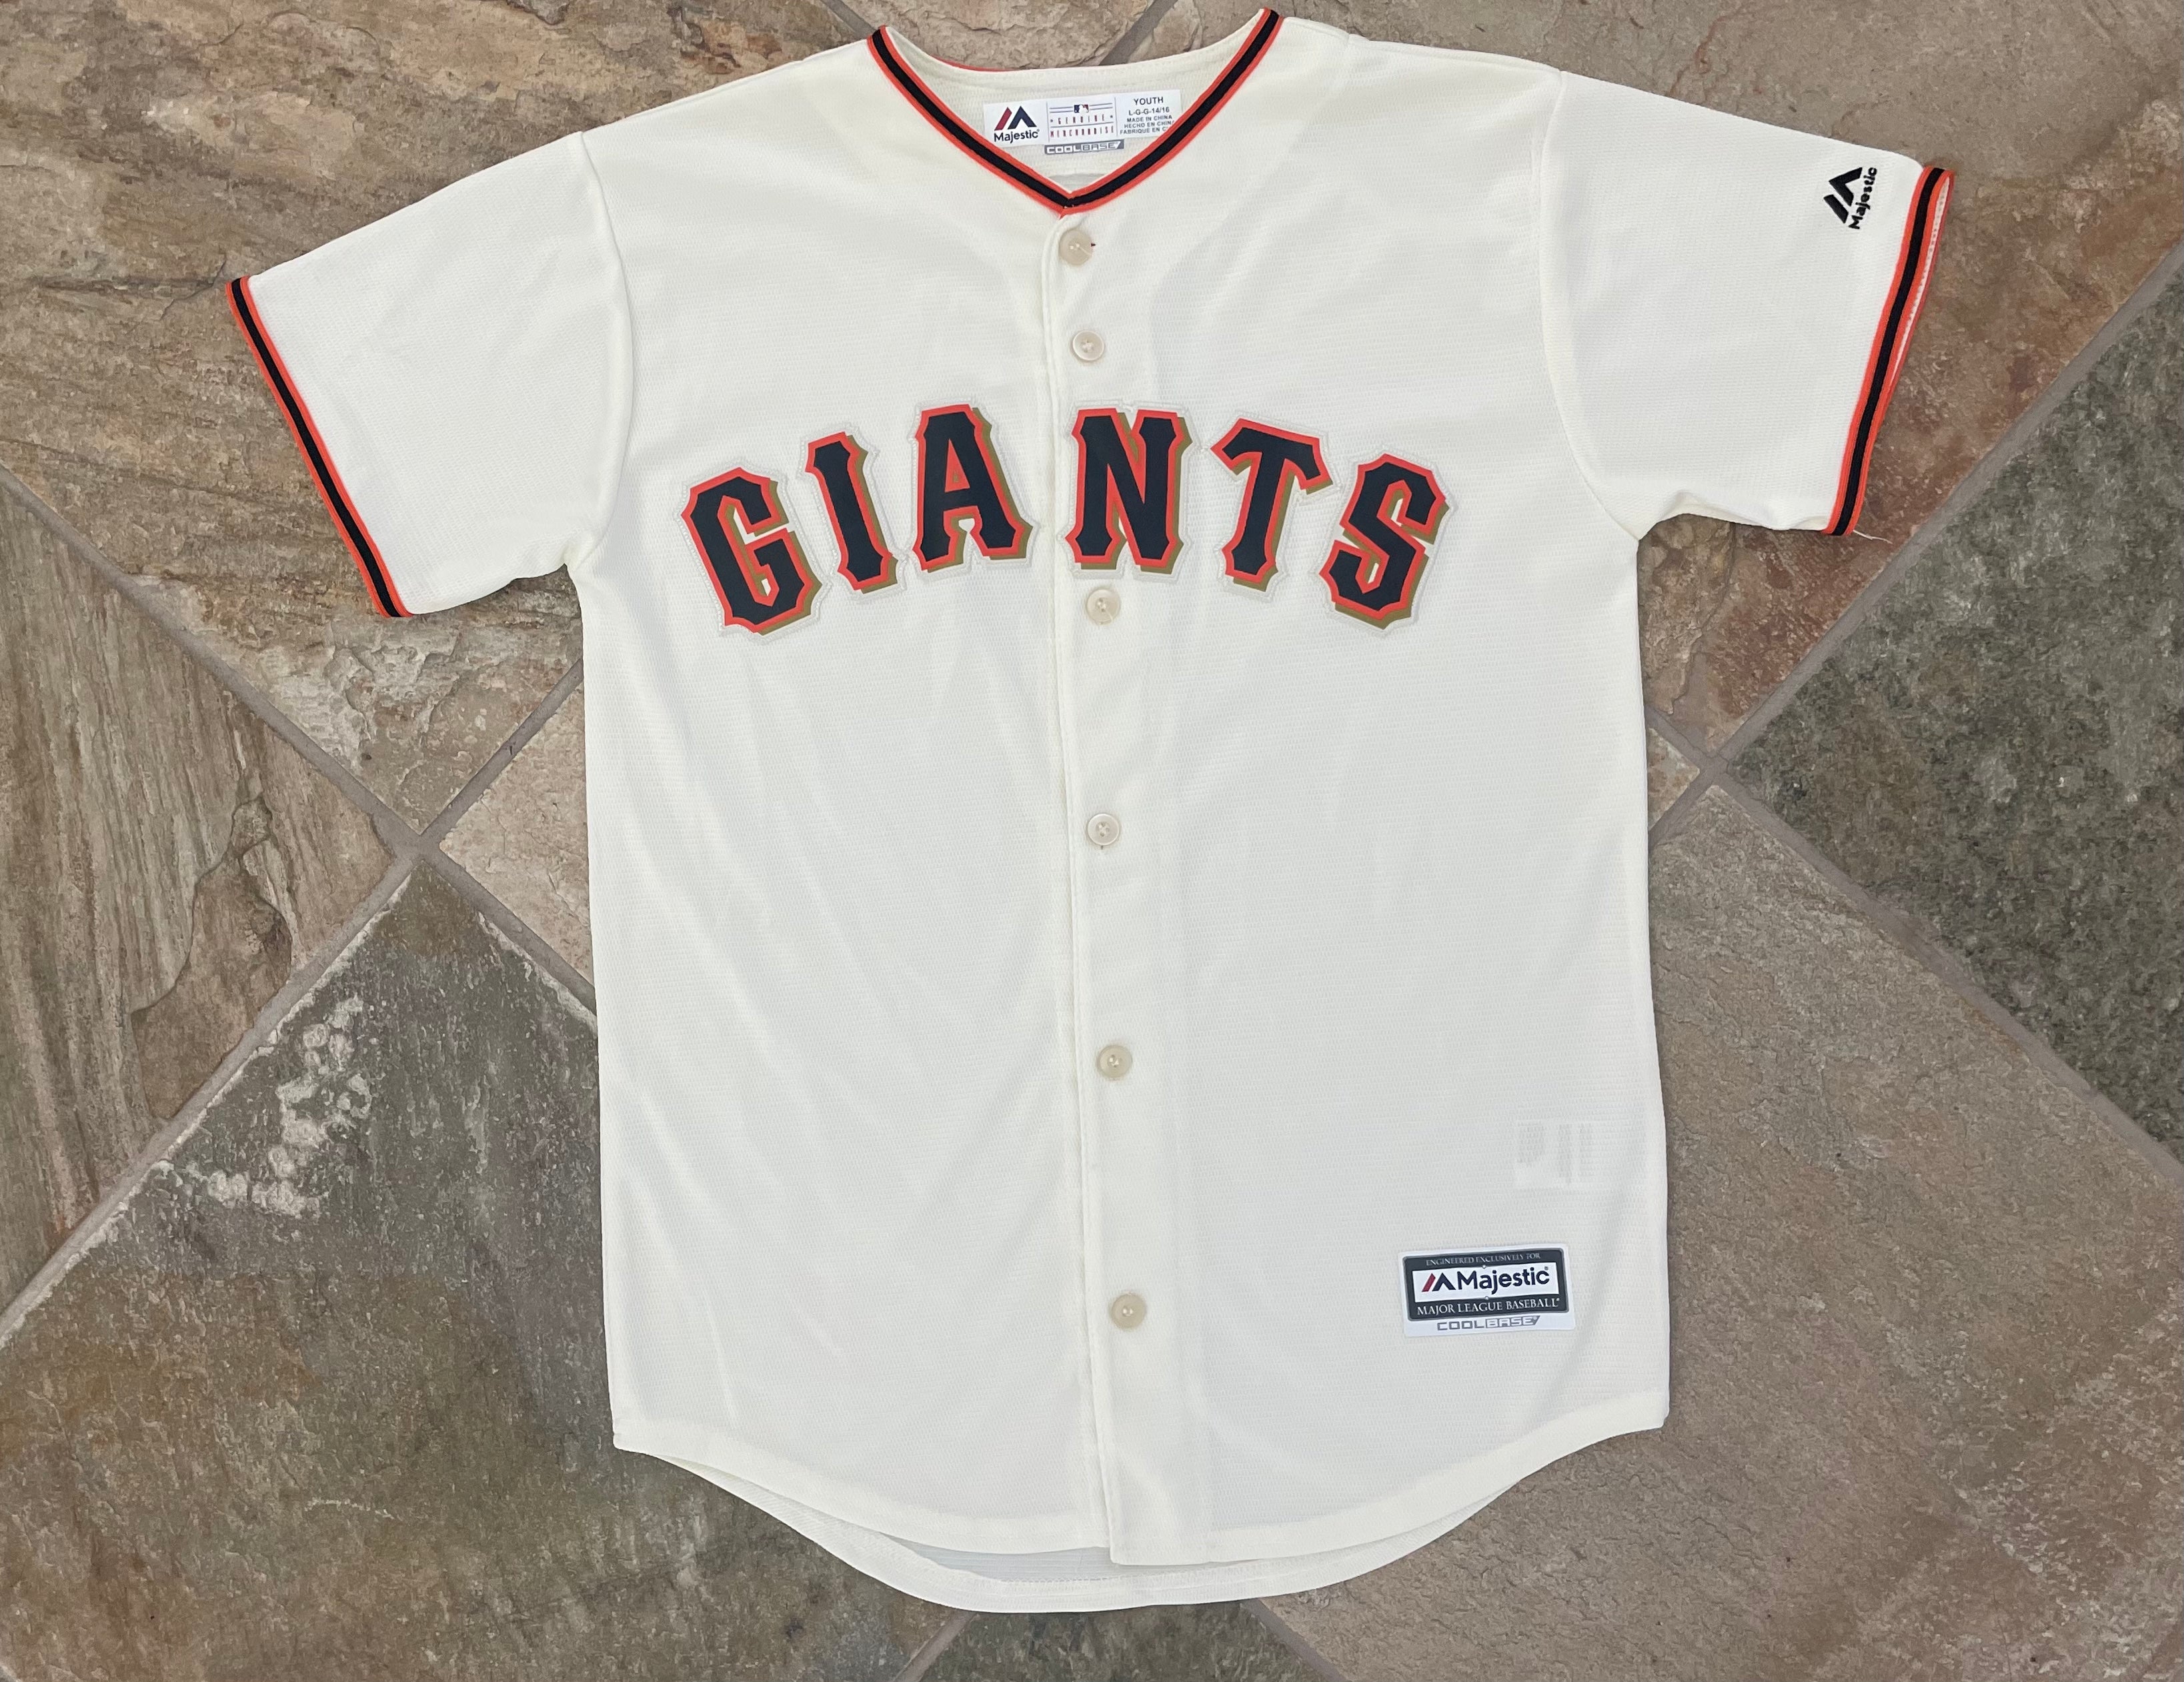 San Francisco Giants Jerseys in San Francisco Giants Team Shop 